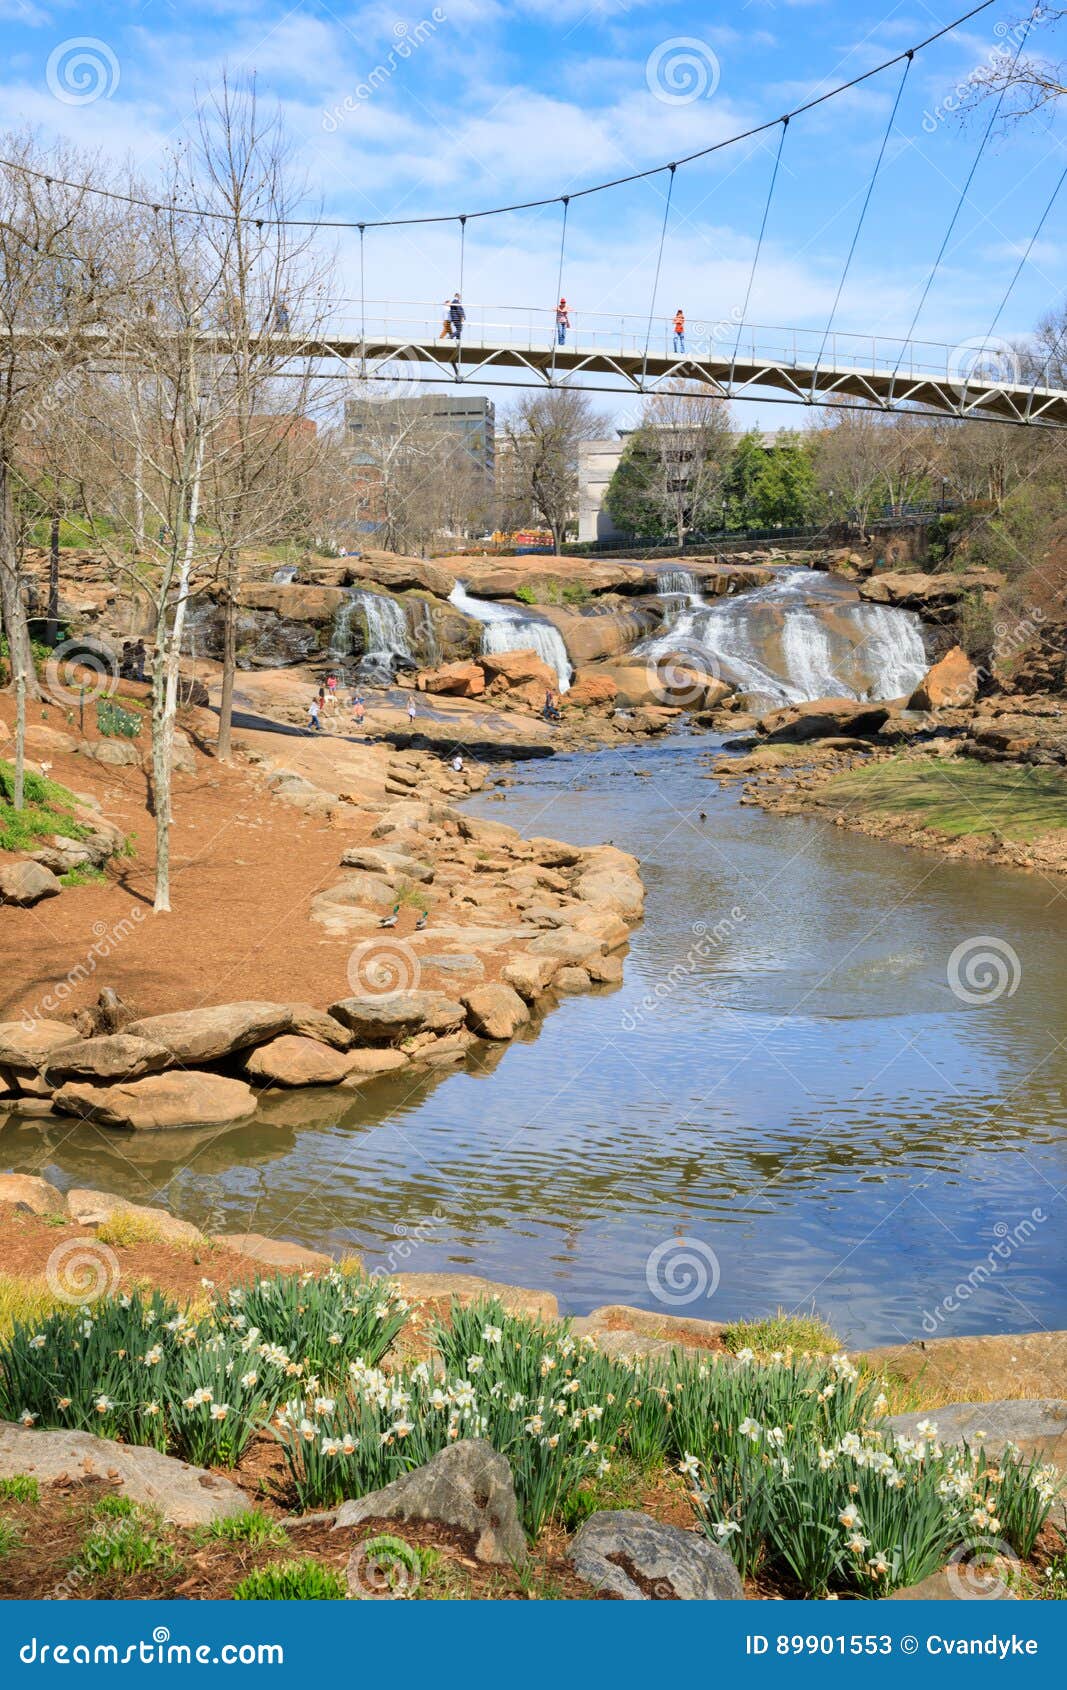 greenville sc liberty bridge falls park reedy river